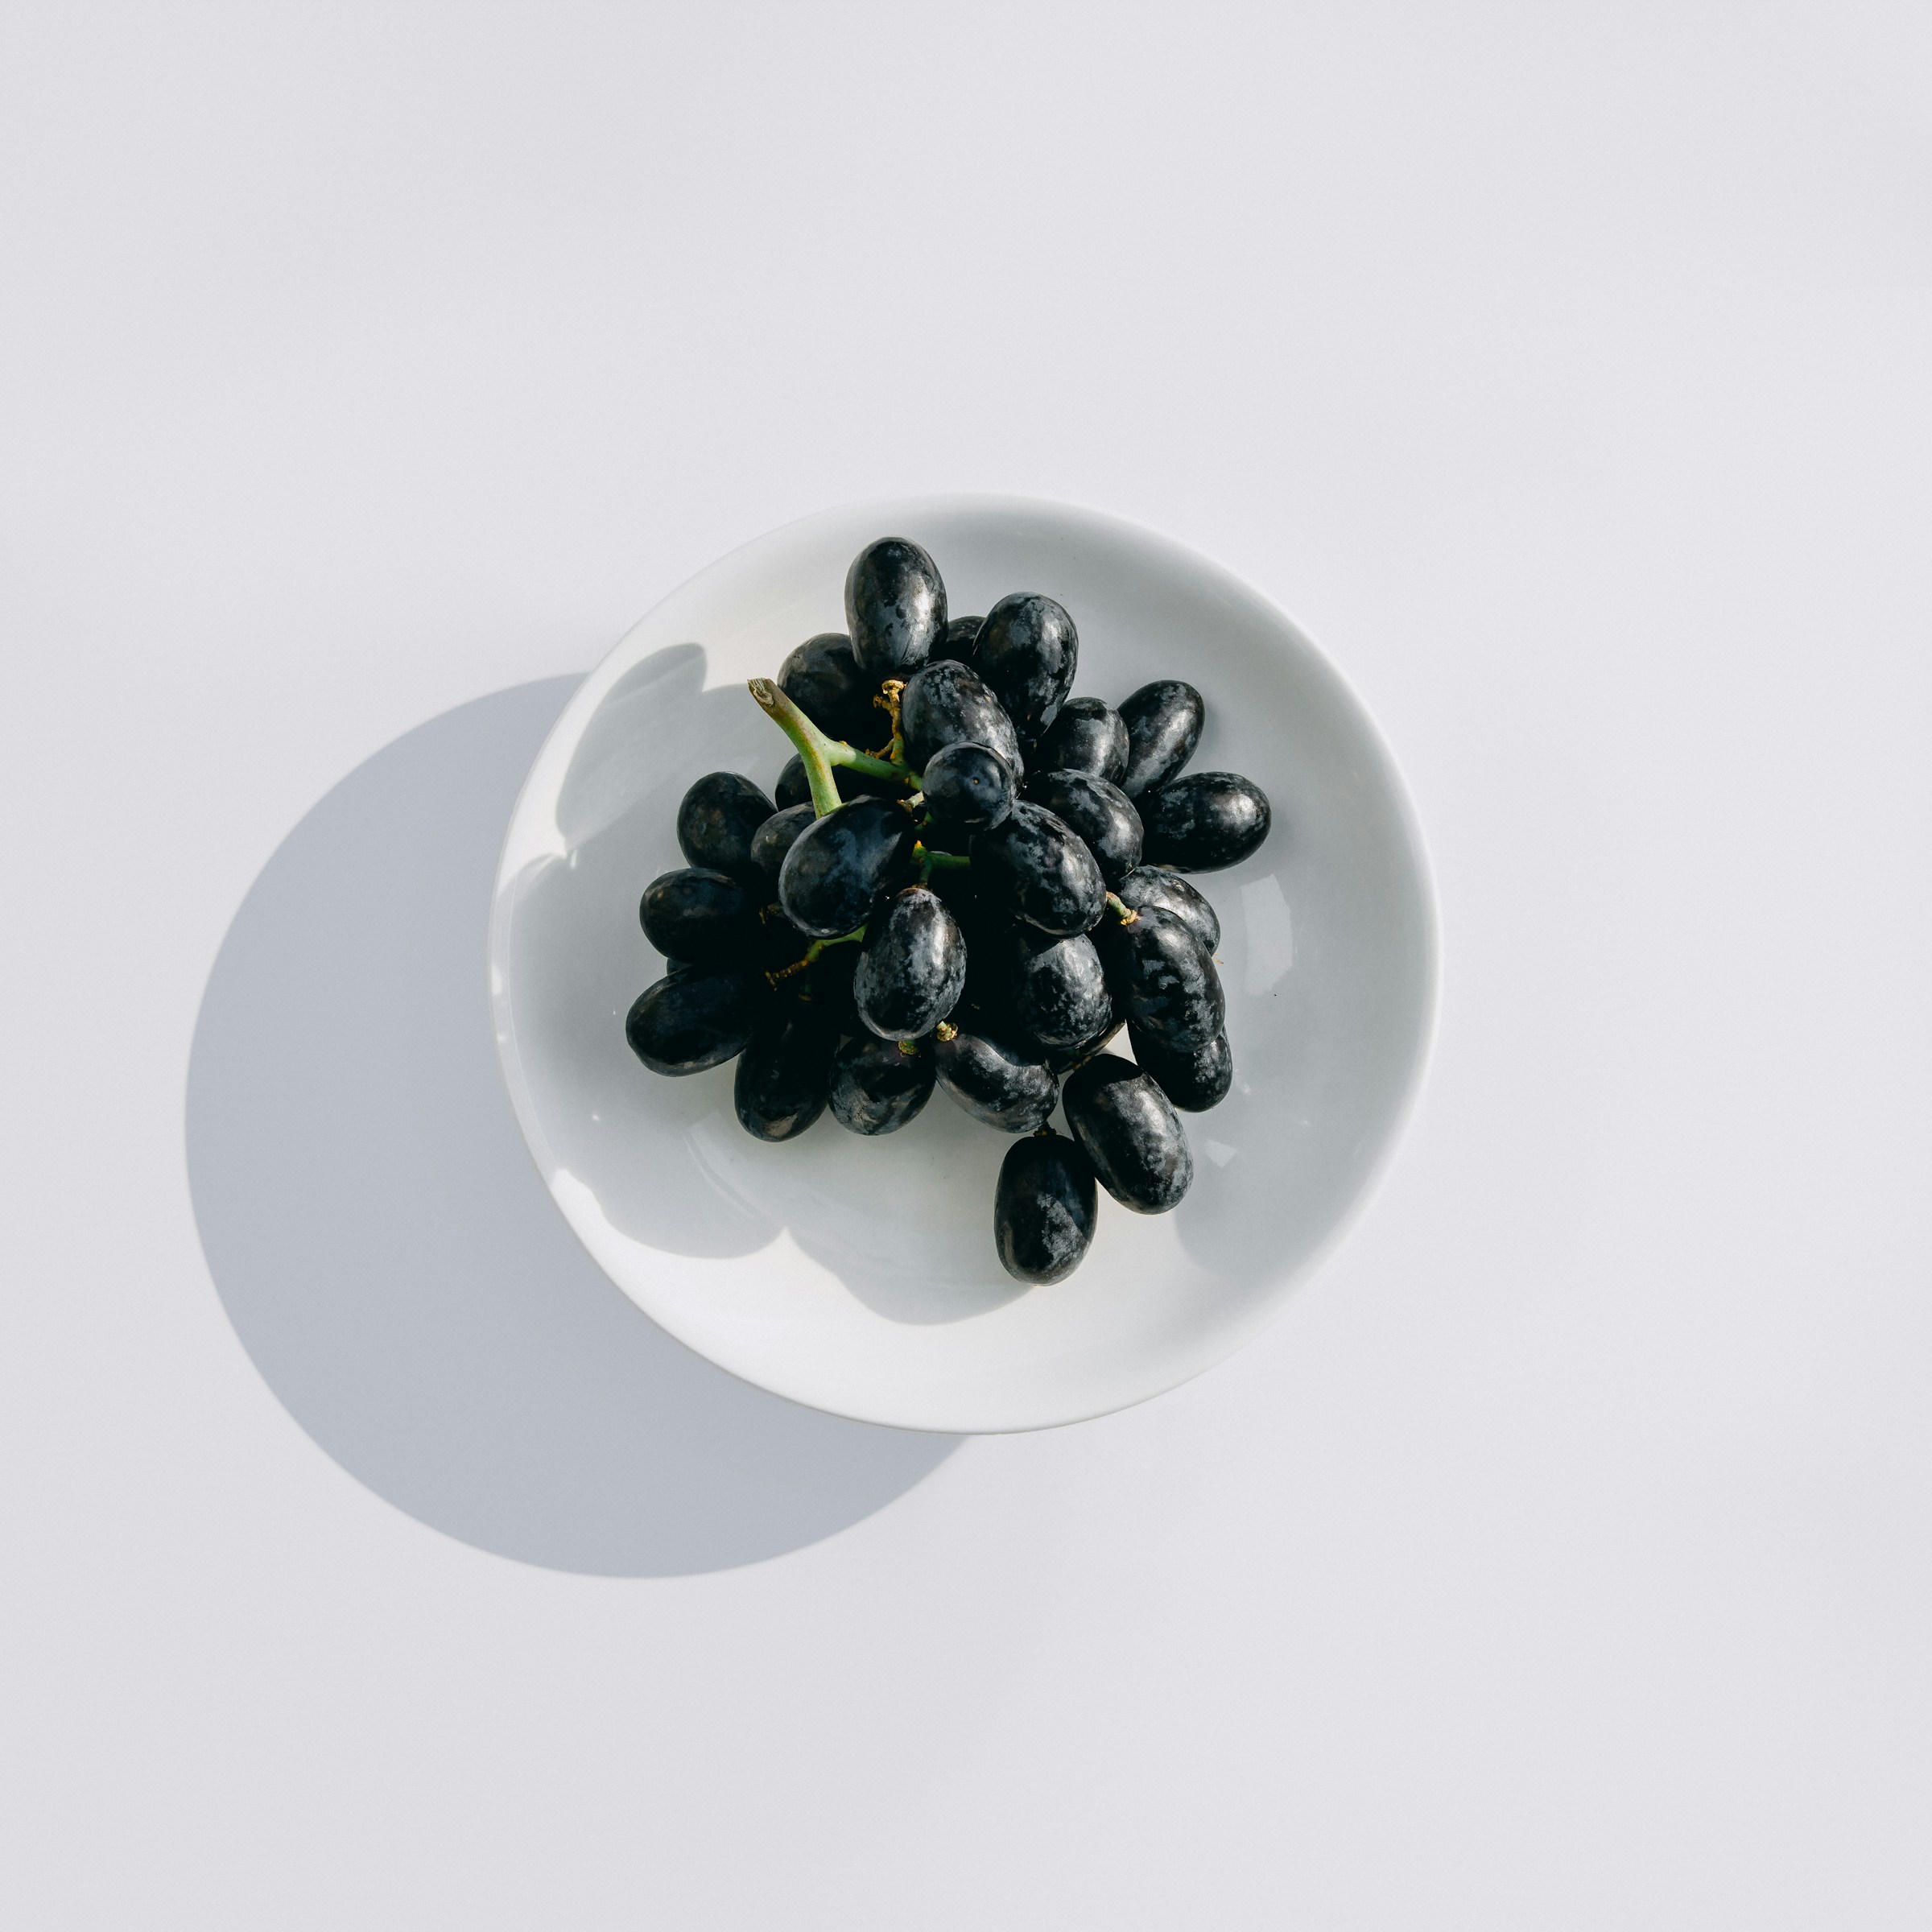 Un bol de raisins | Source : Unsplash